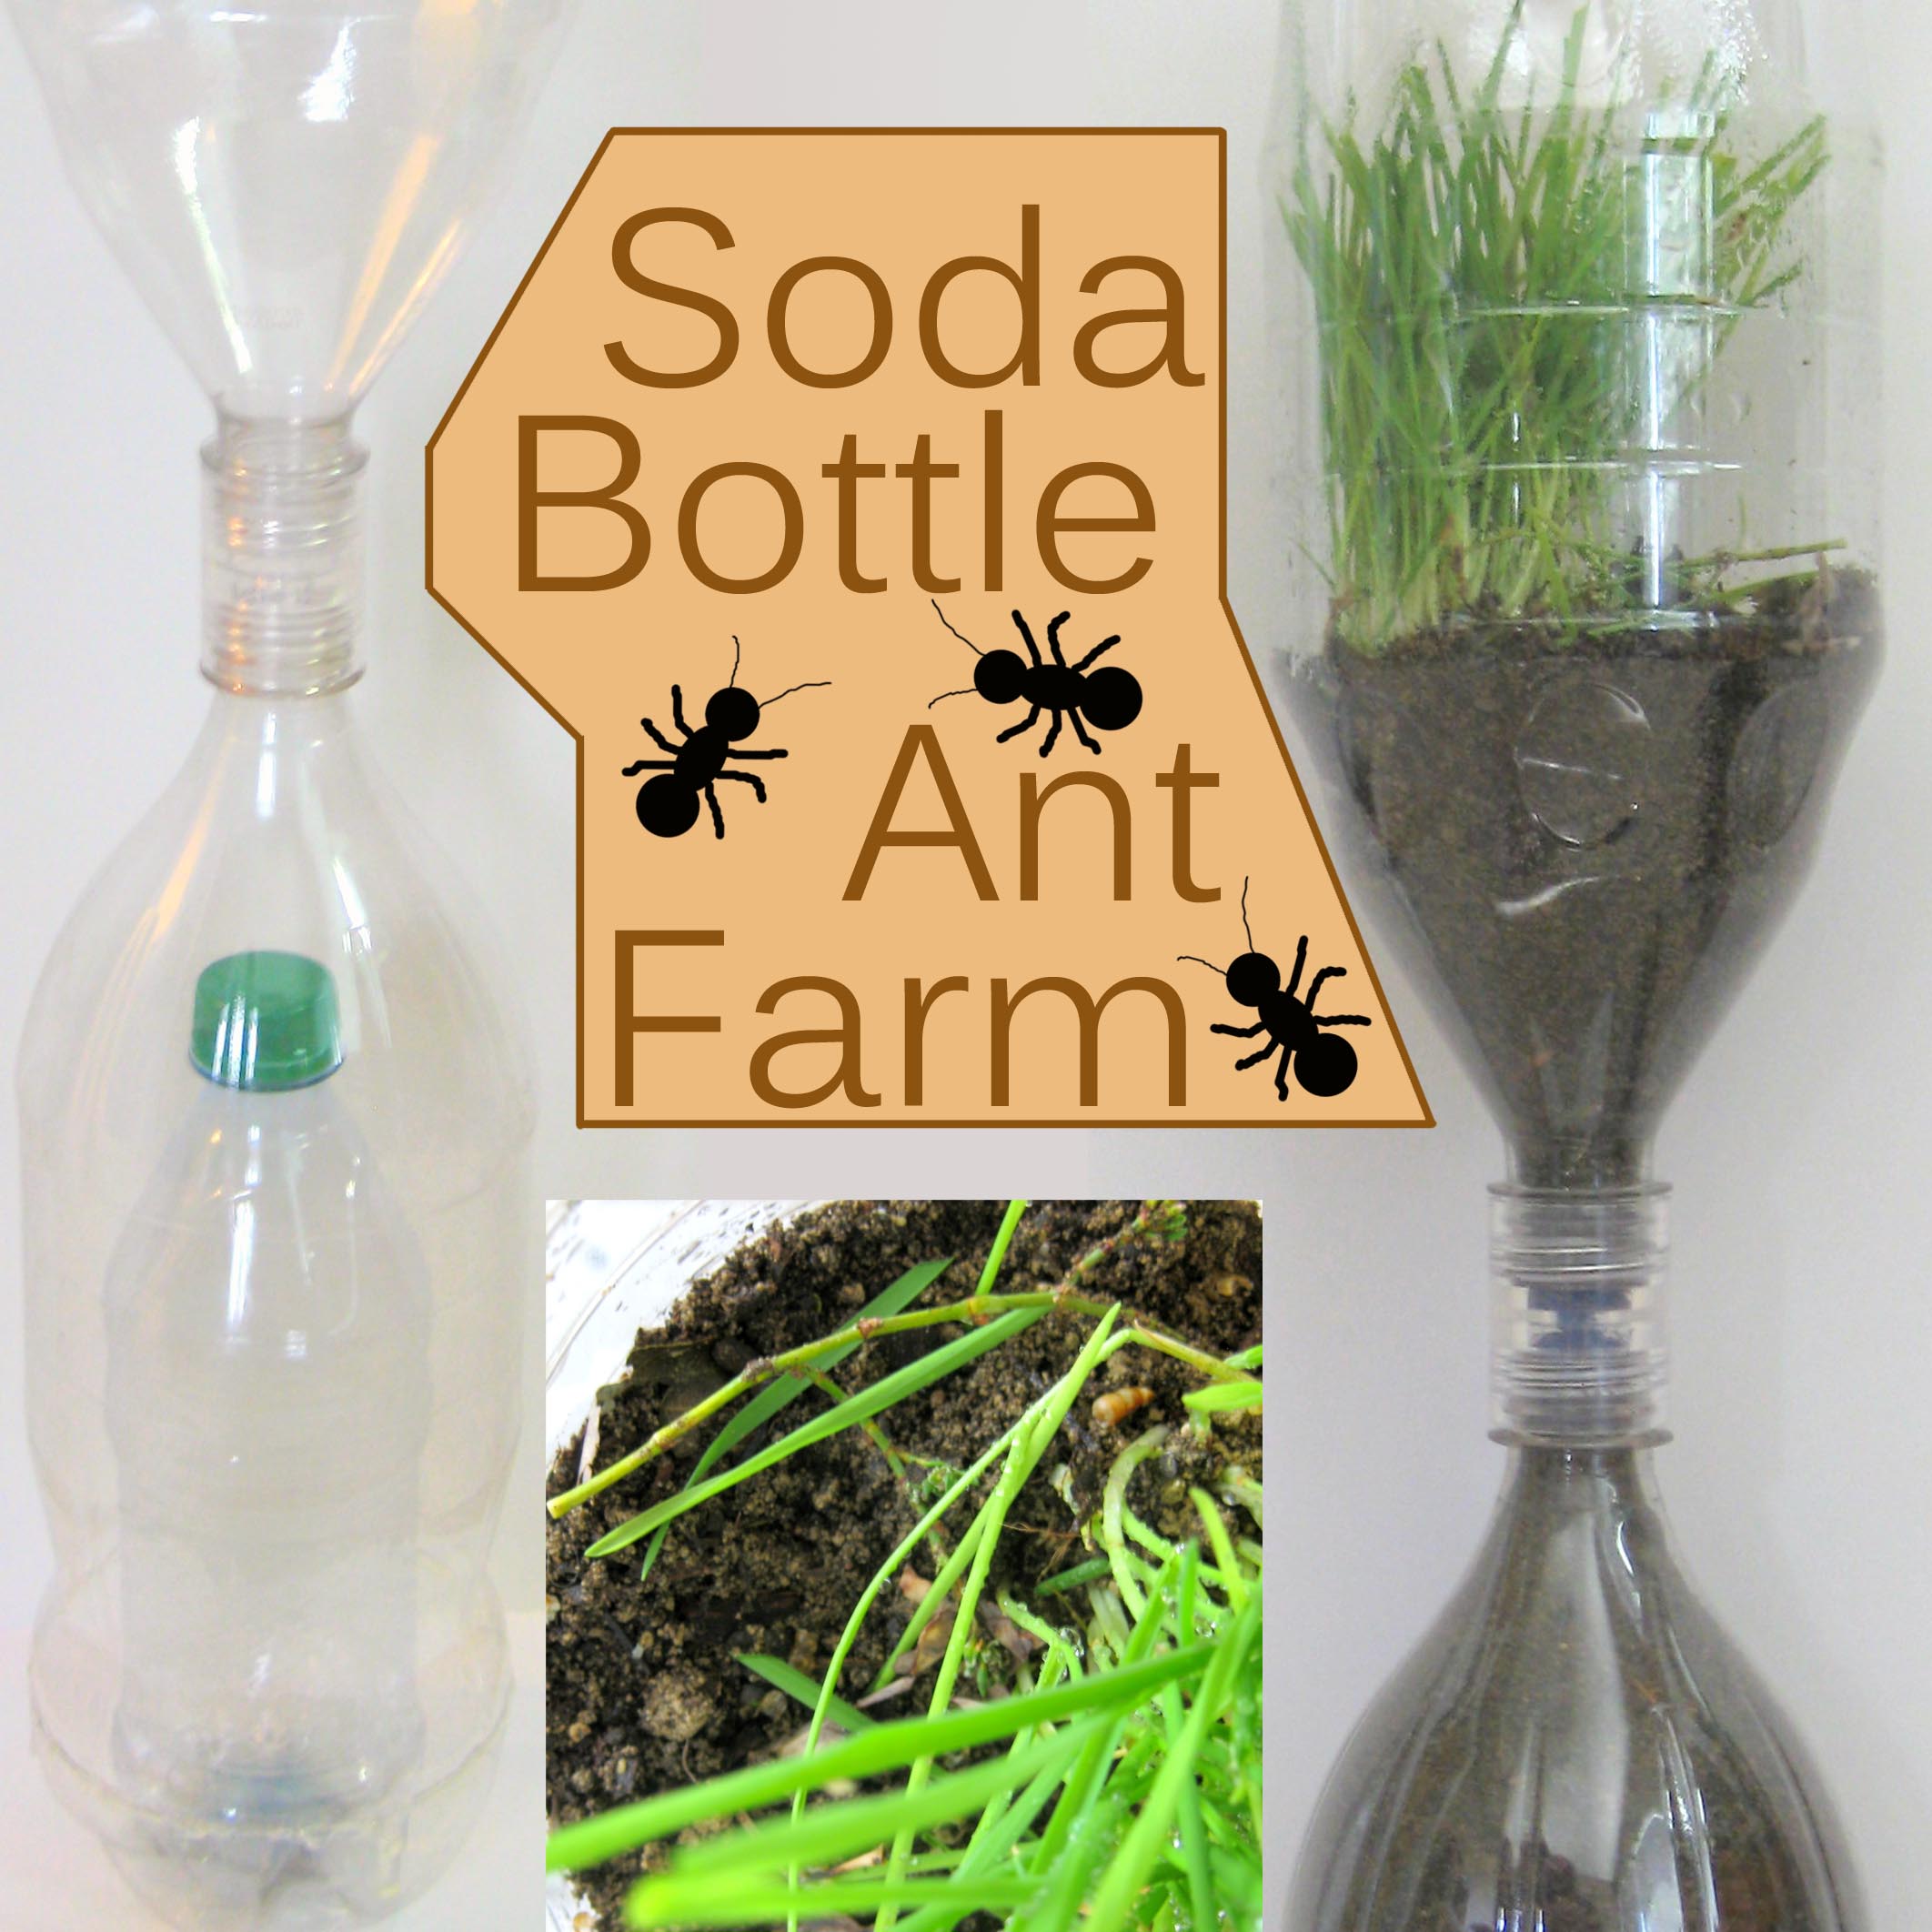 Soda Bottle Ant Farm